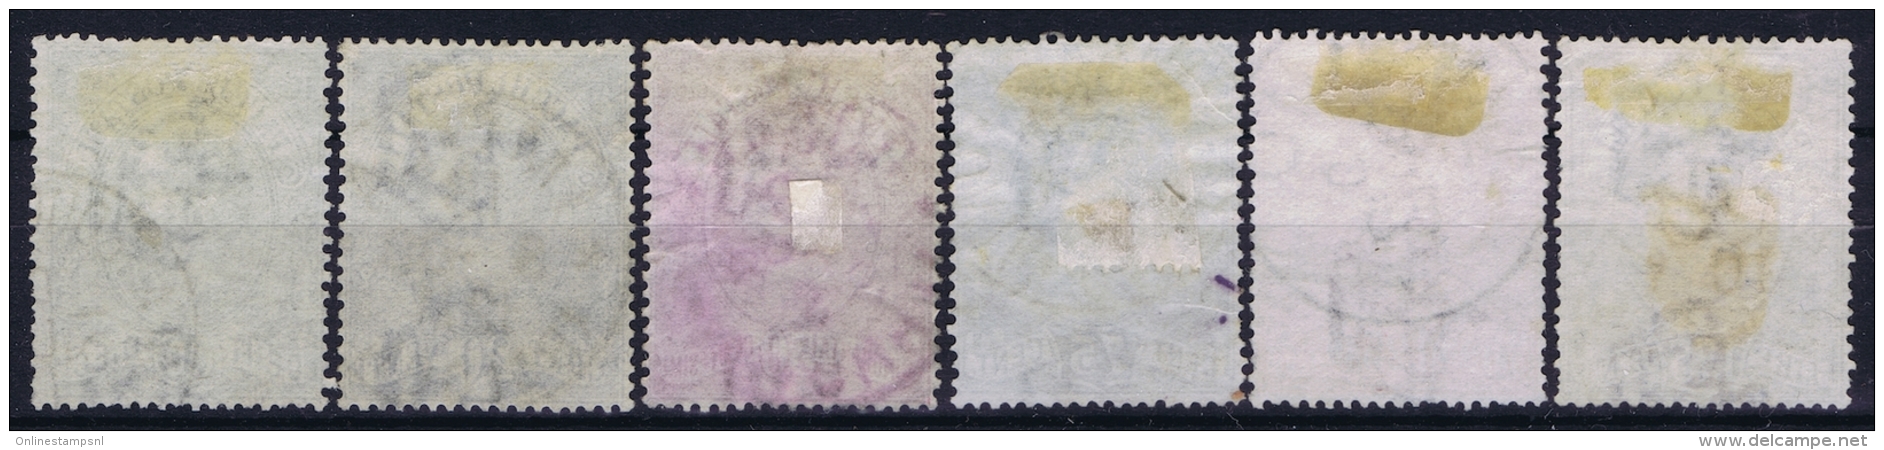 Italy: Sa 1- 6  Mi Nr 1 - 6  Obl./Gestempelt/used   1878 - Colis-postaux